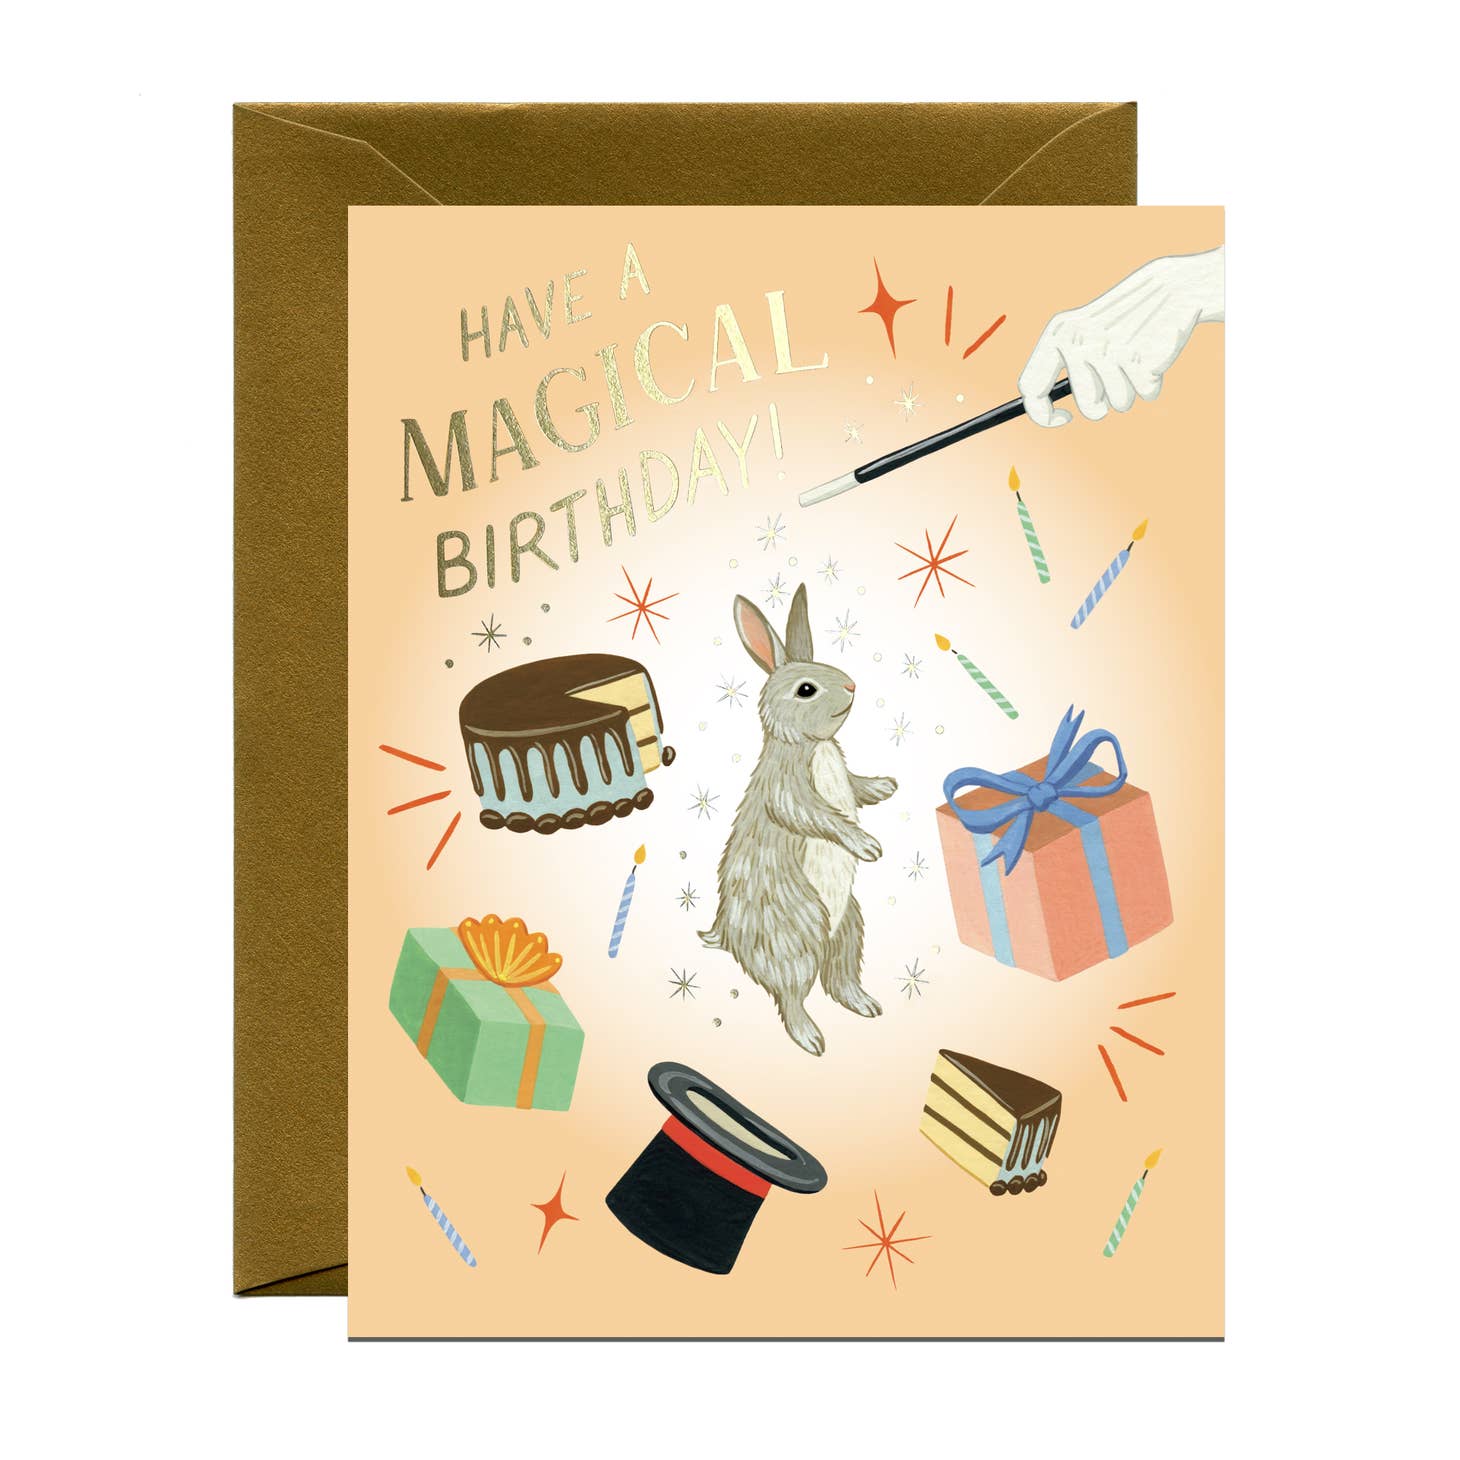 happy bunny birthday cards